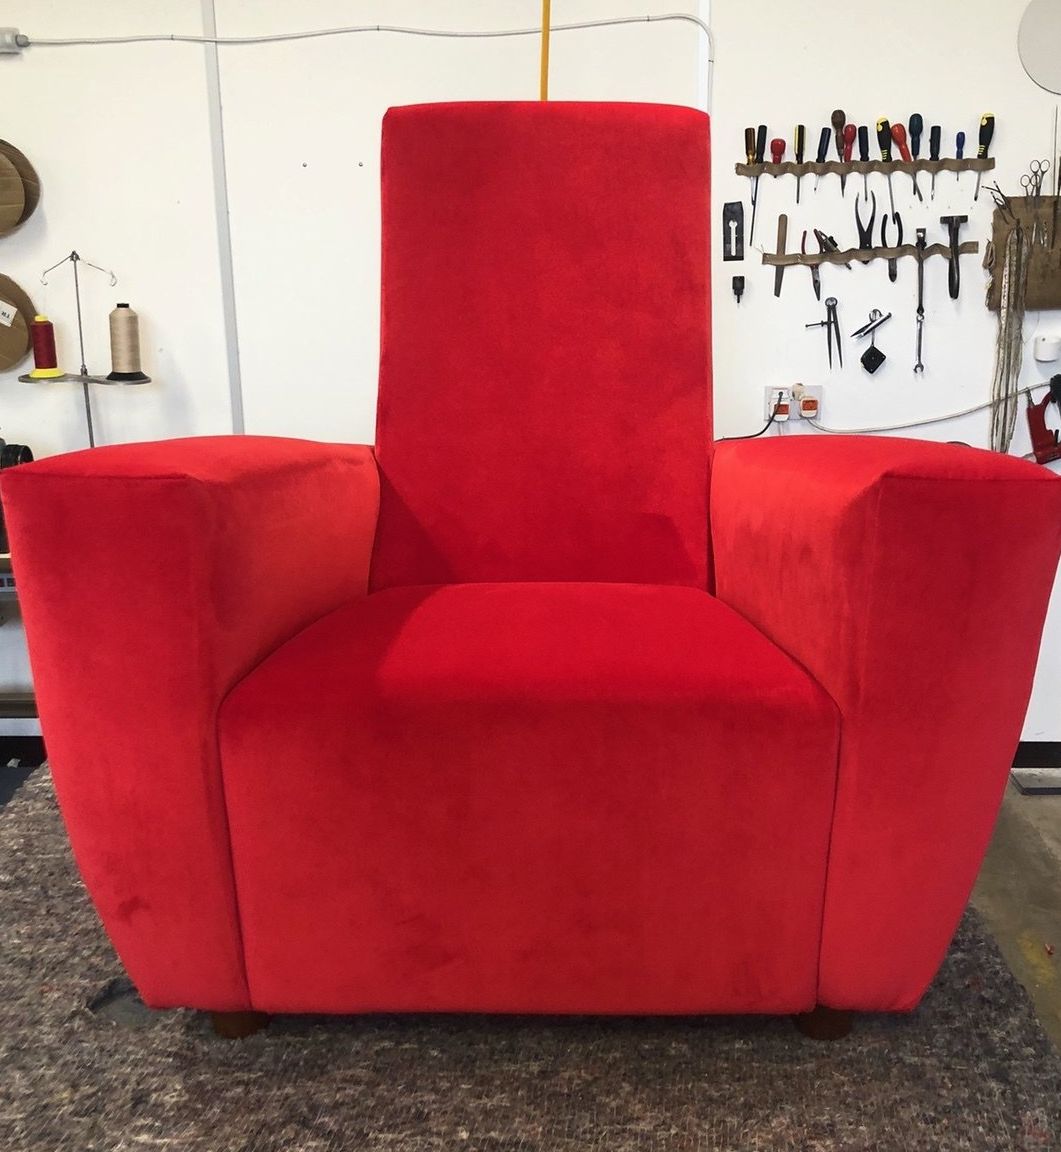 Bright red velvet vintage chair renewed after